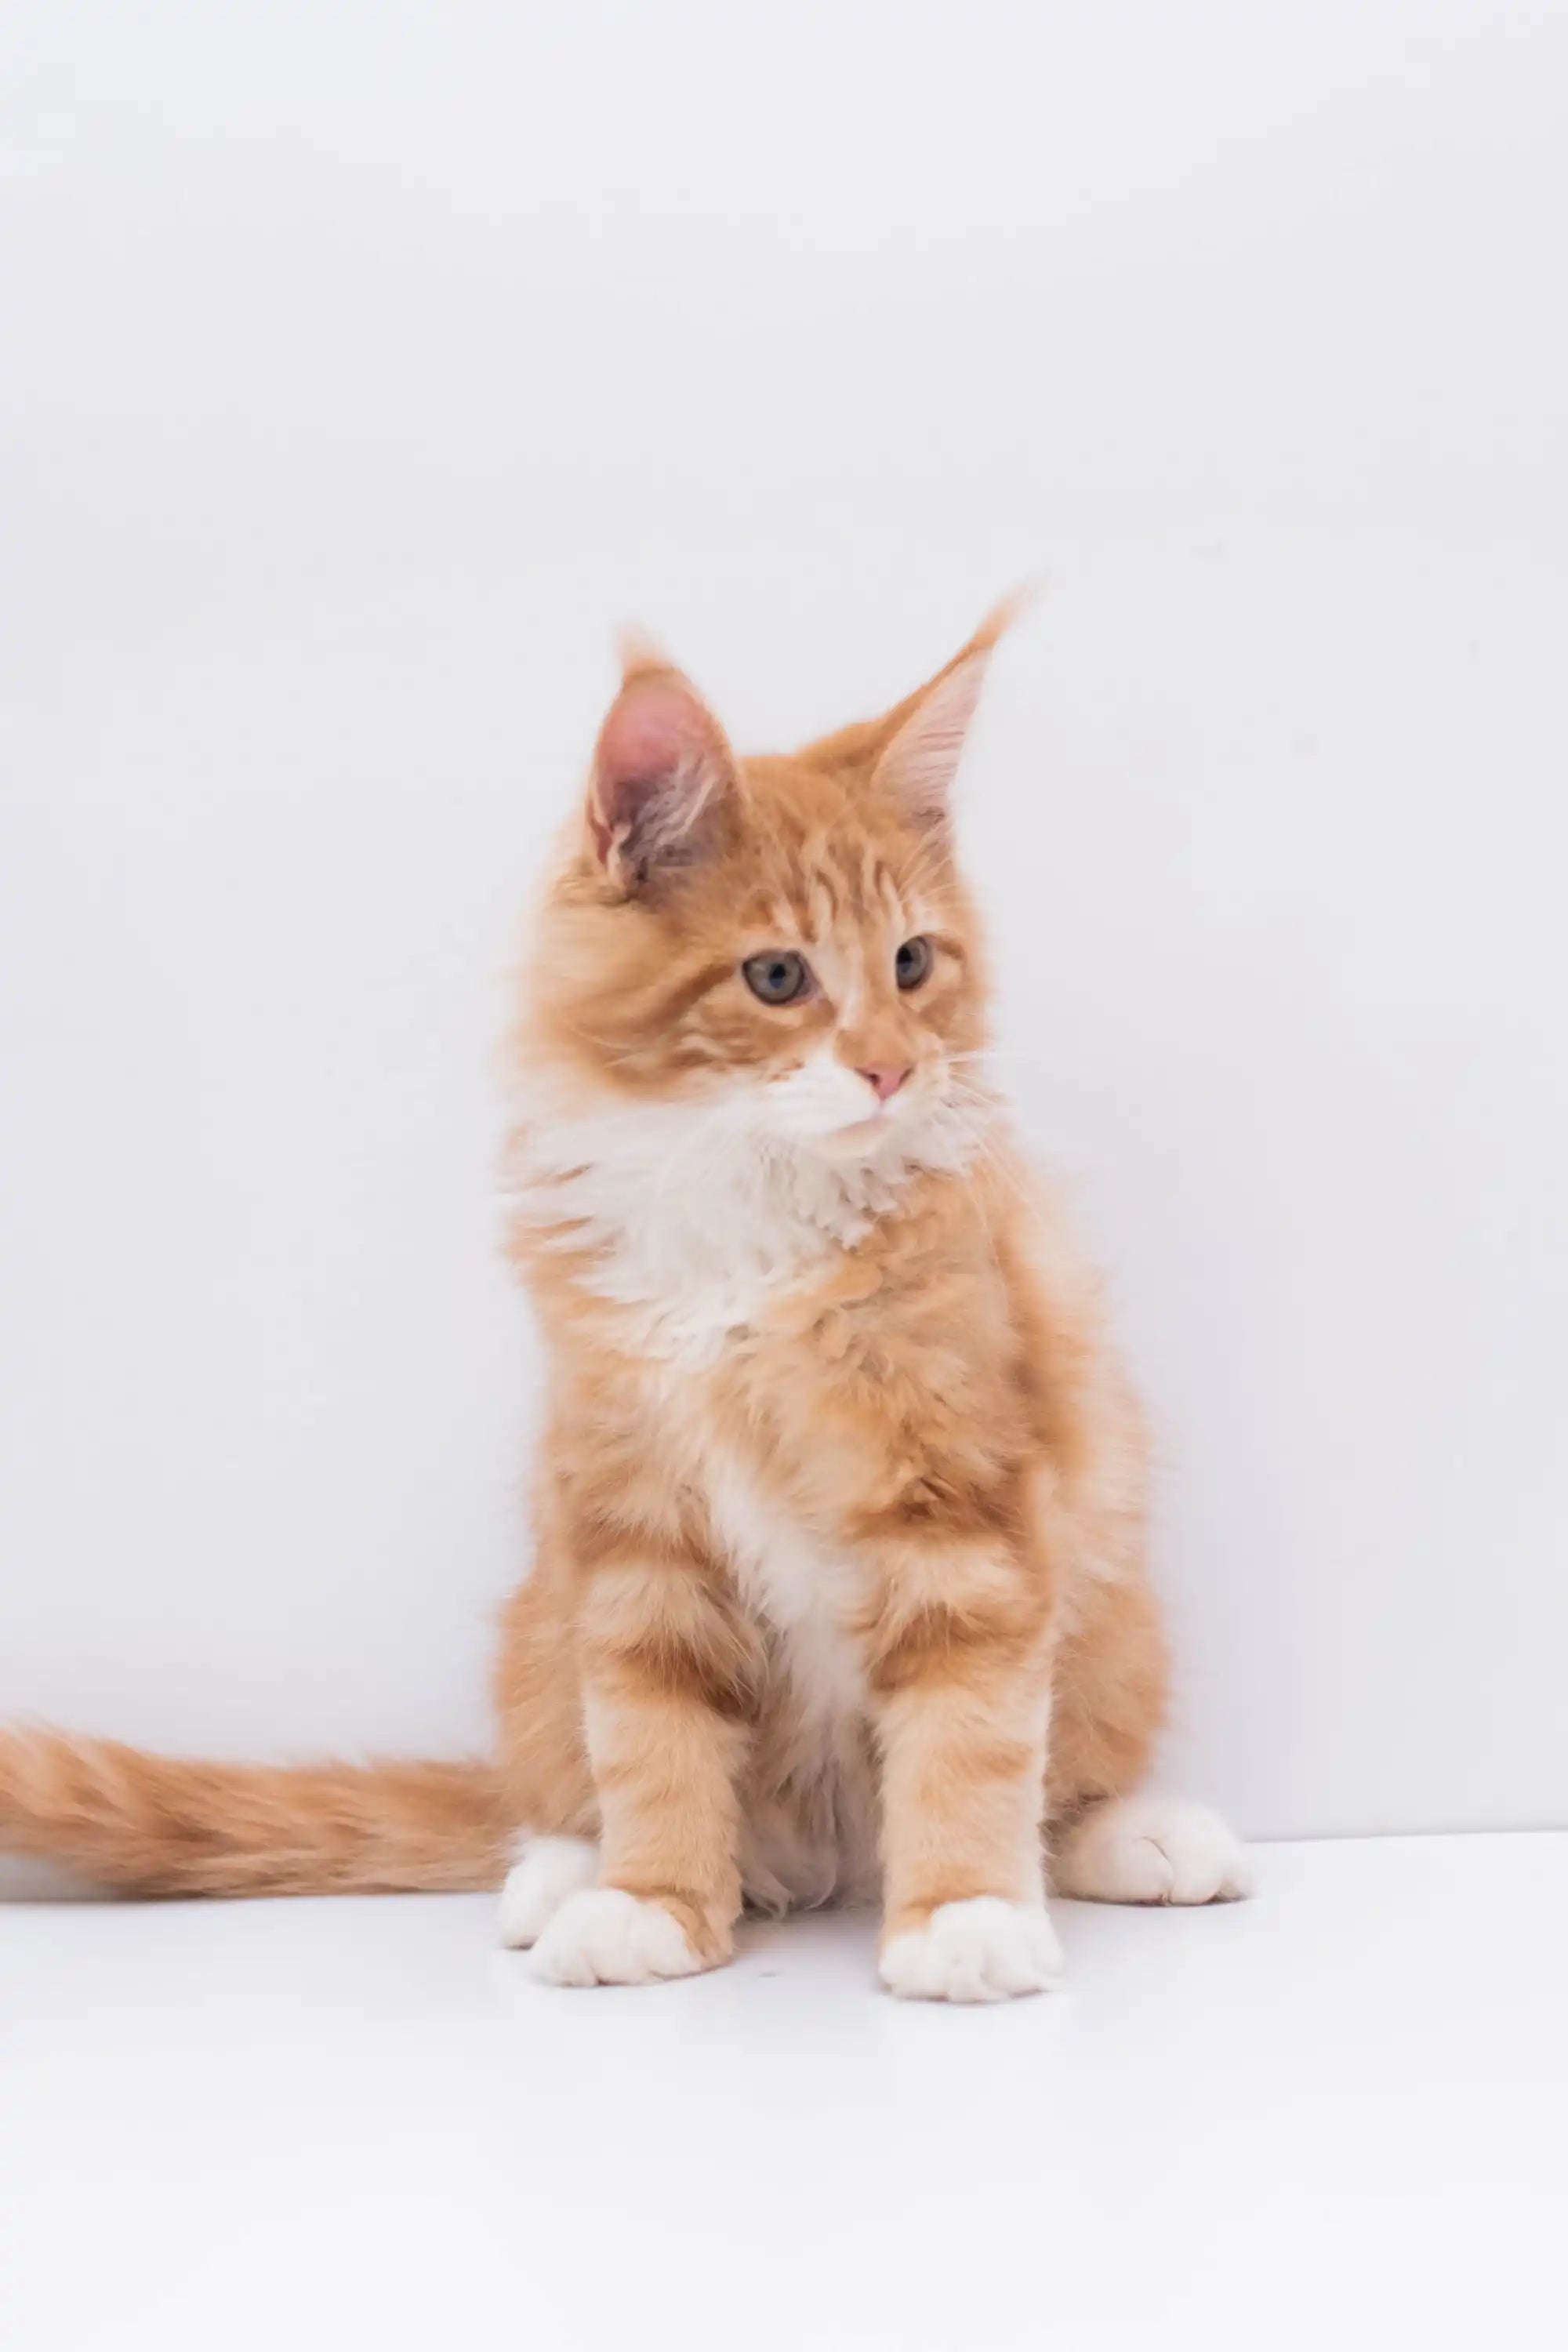 Maine Coon Kittens for Sale Marley | Kitten